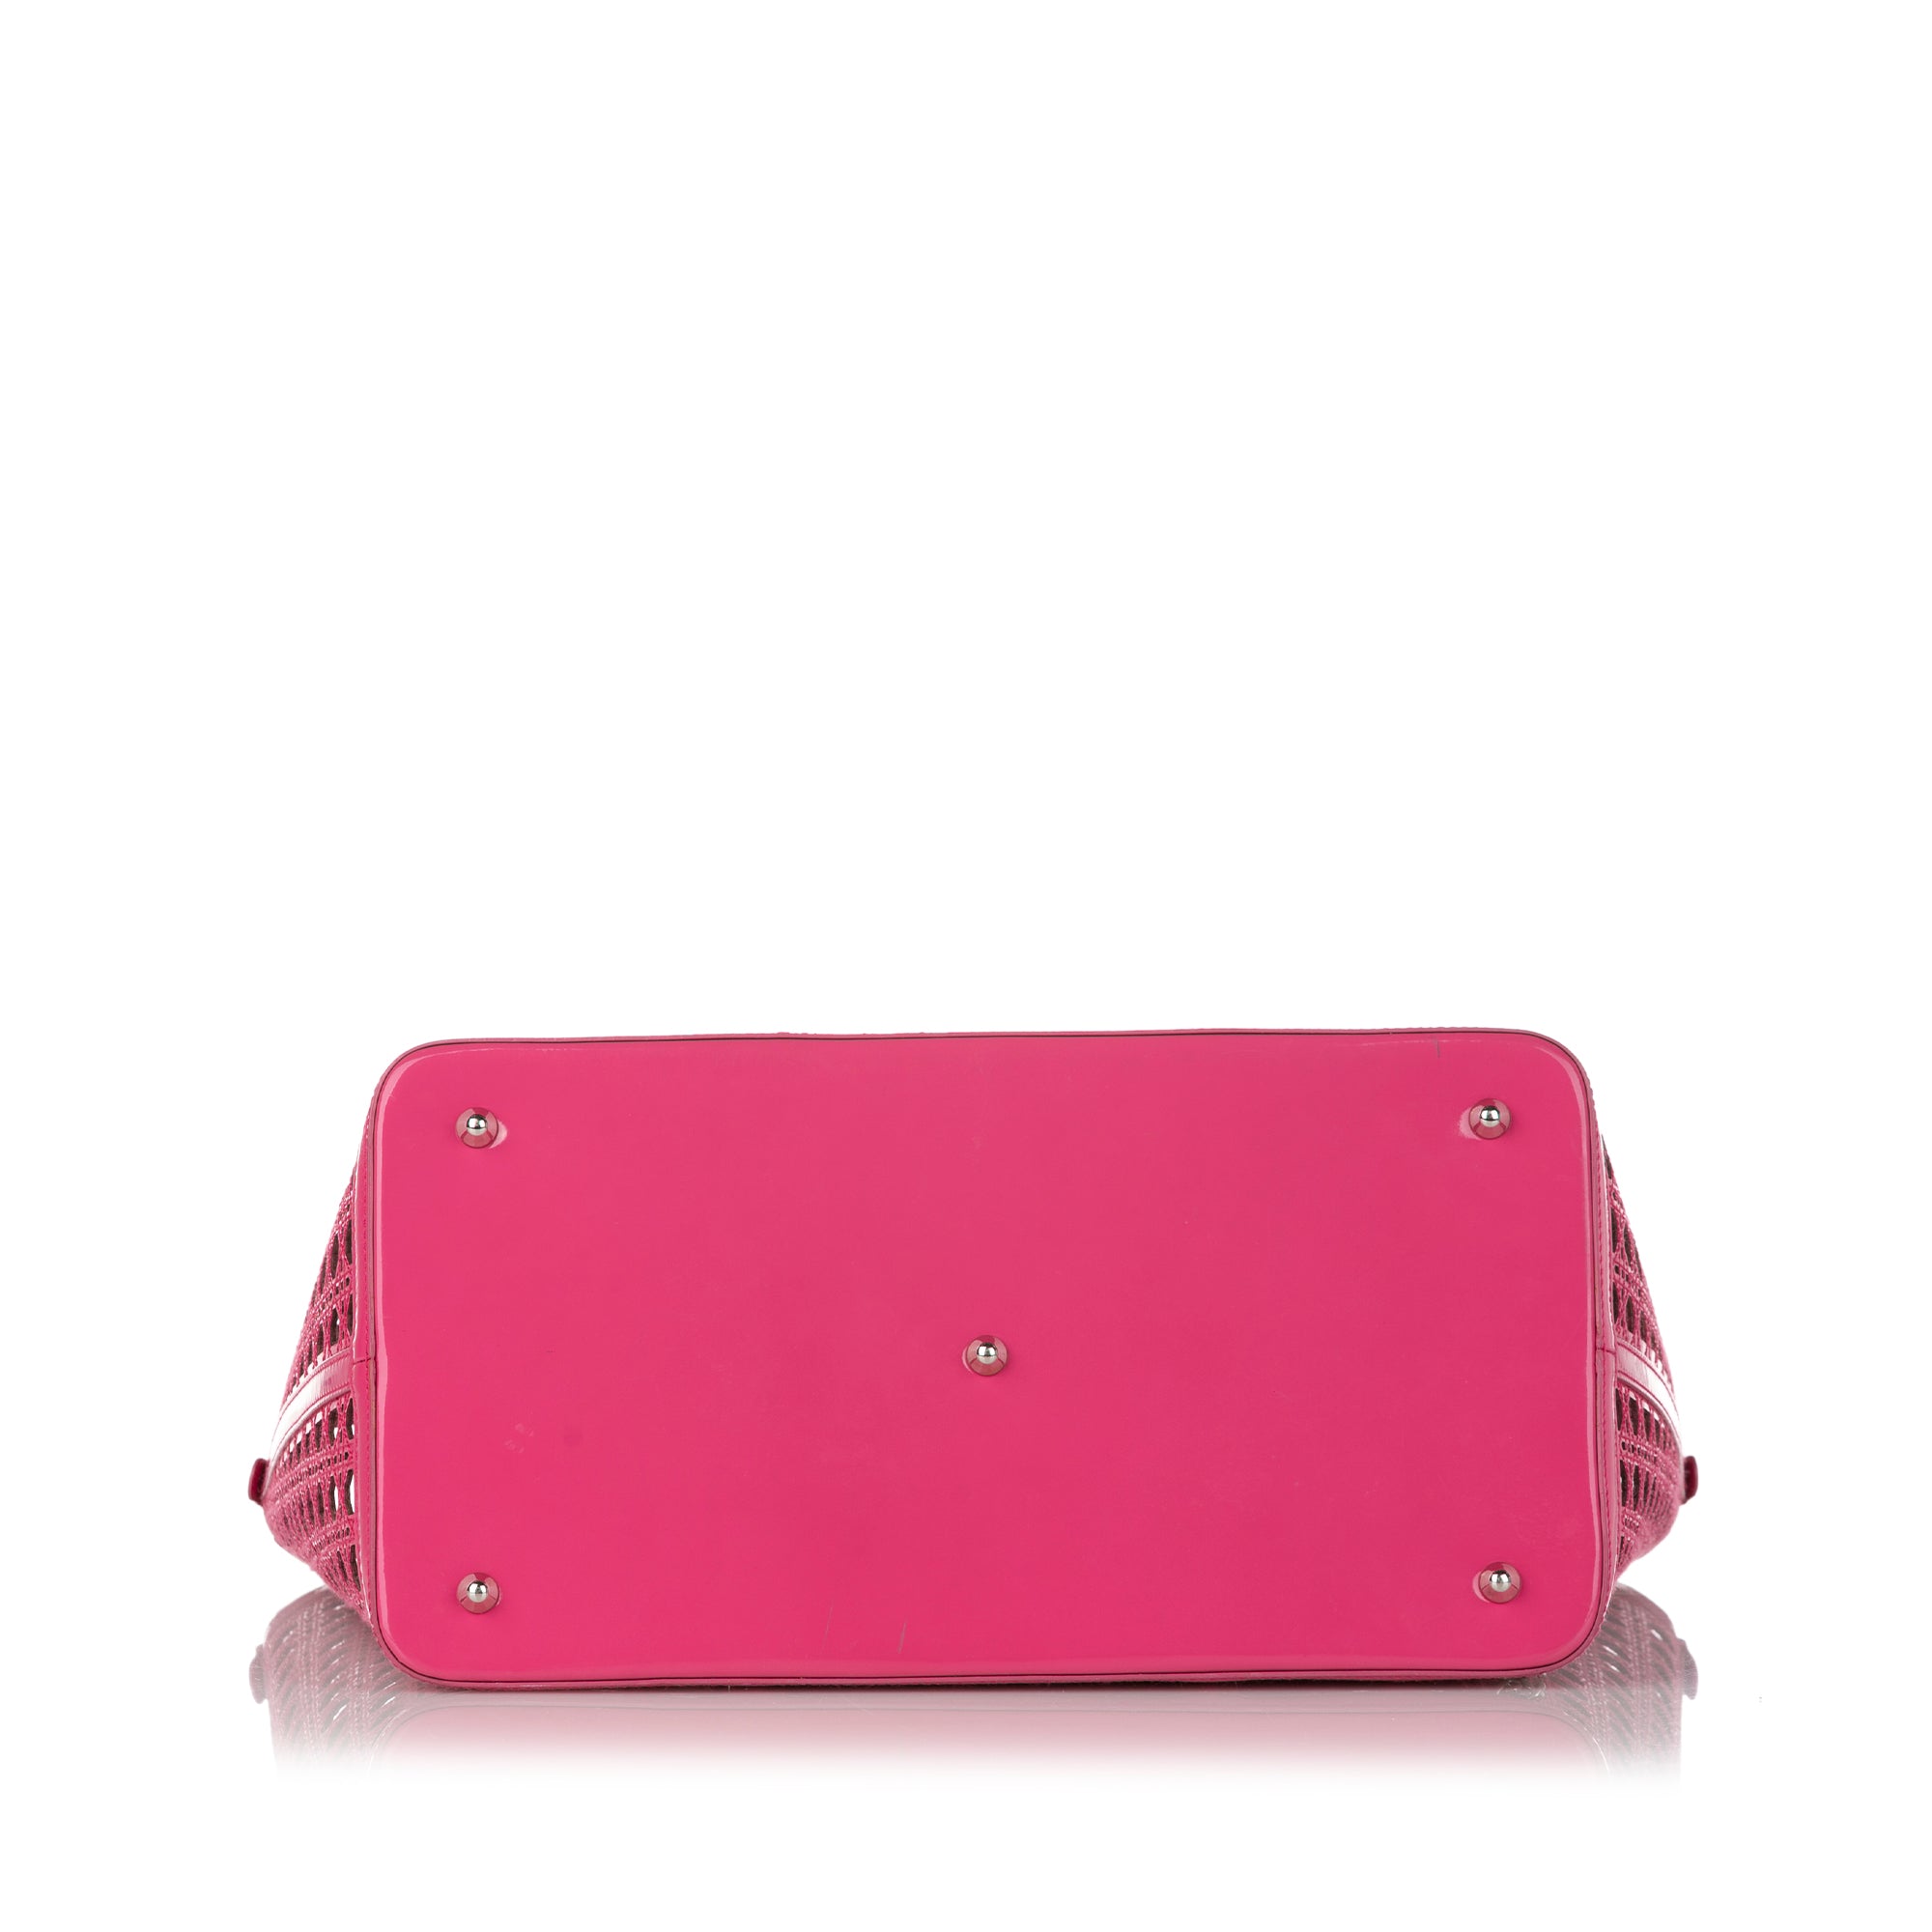 Christian Dior, a pink patent leather handbag. - Bukowskis